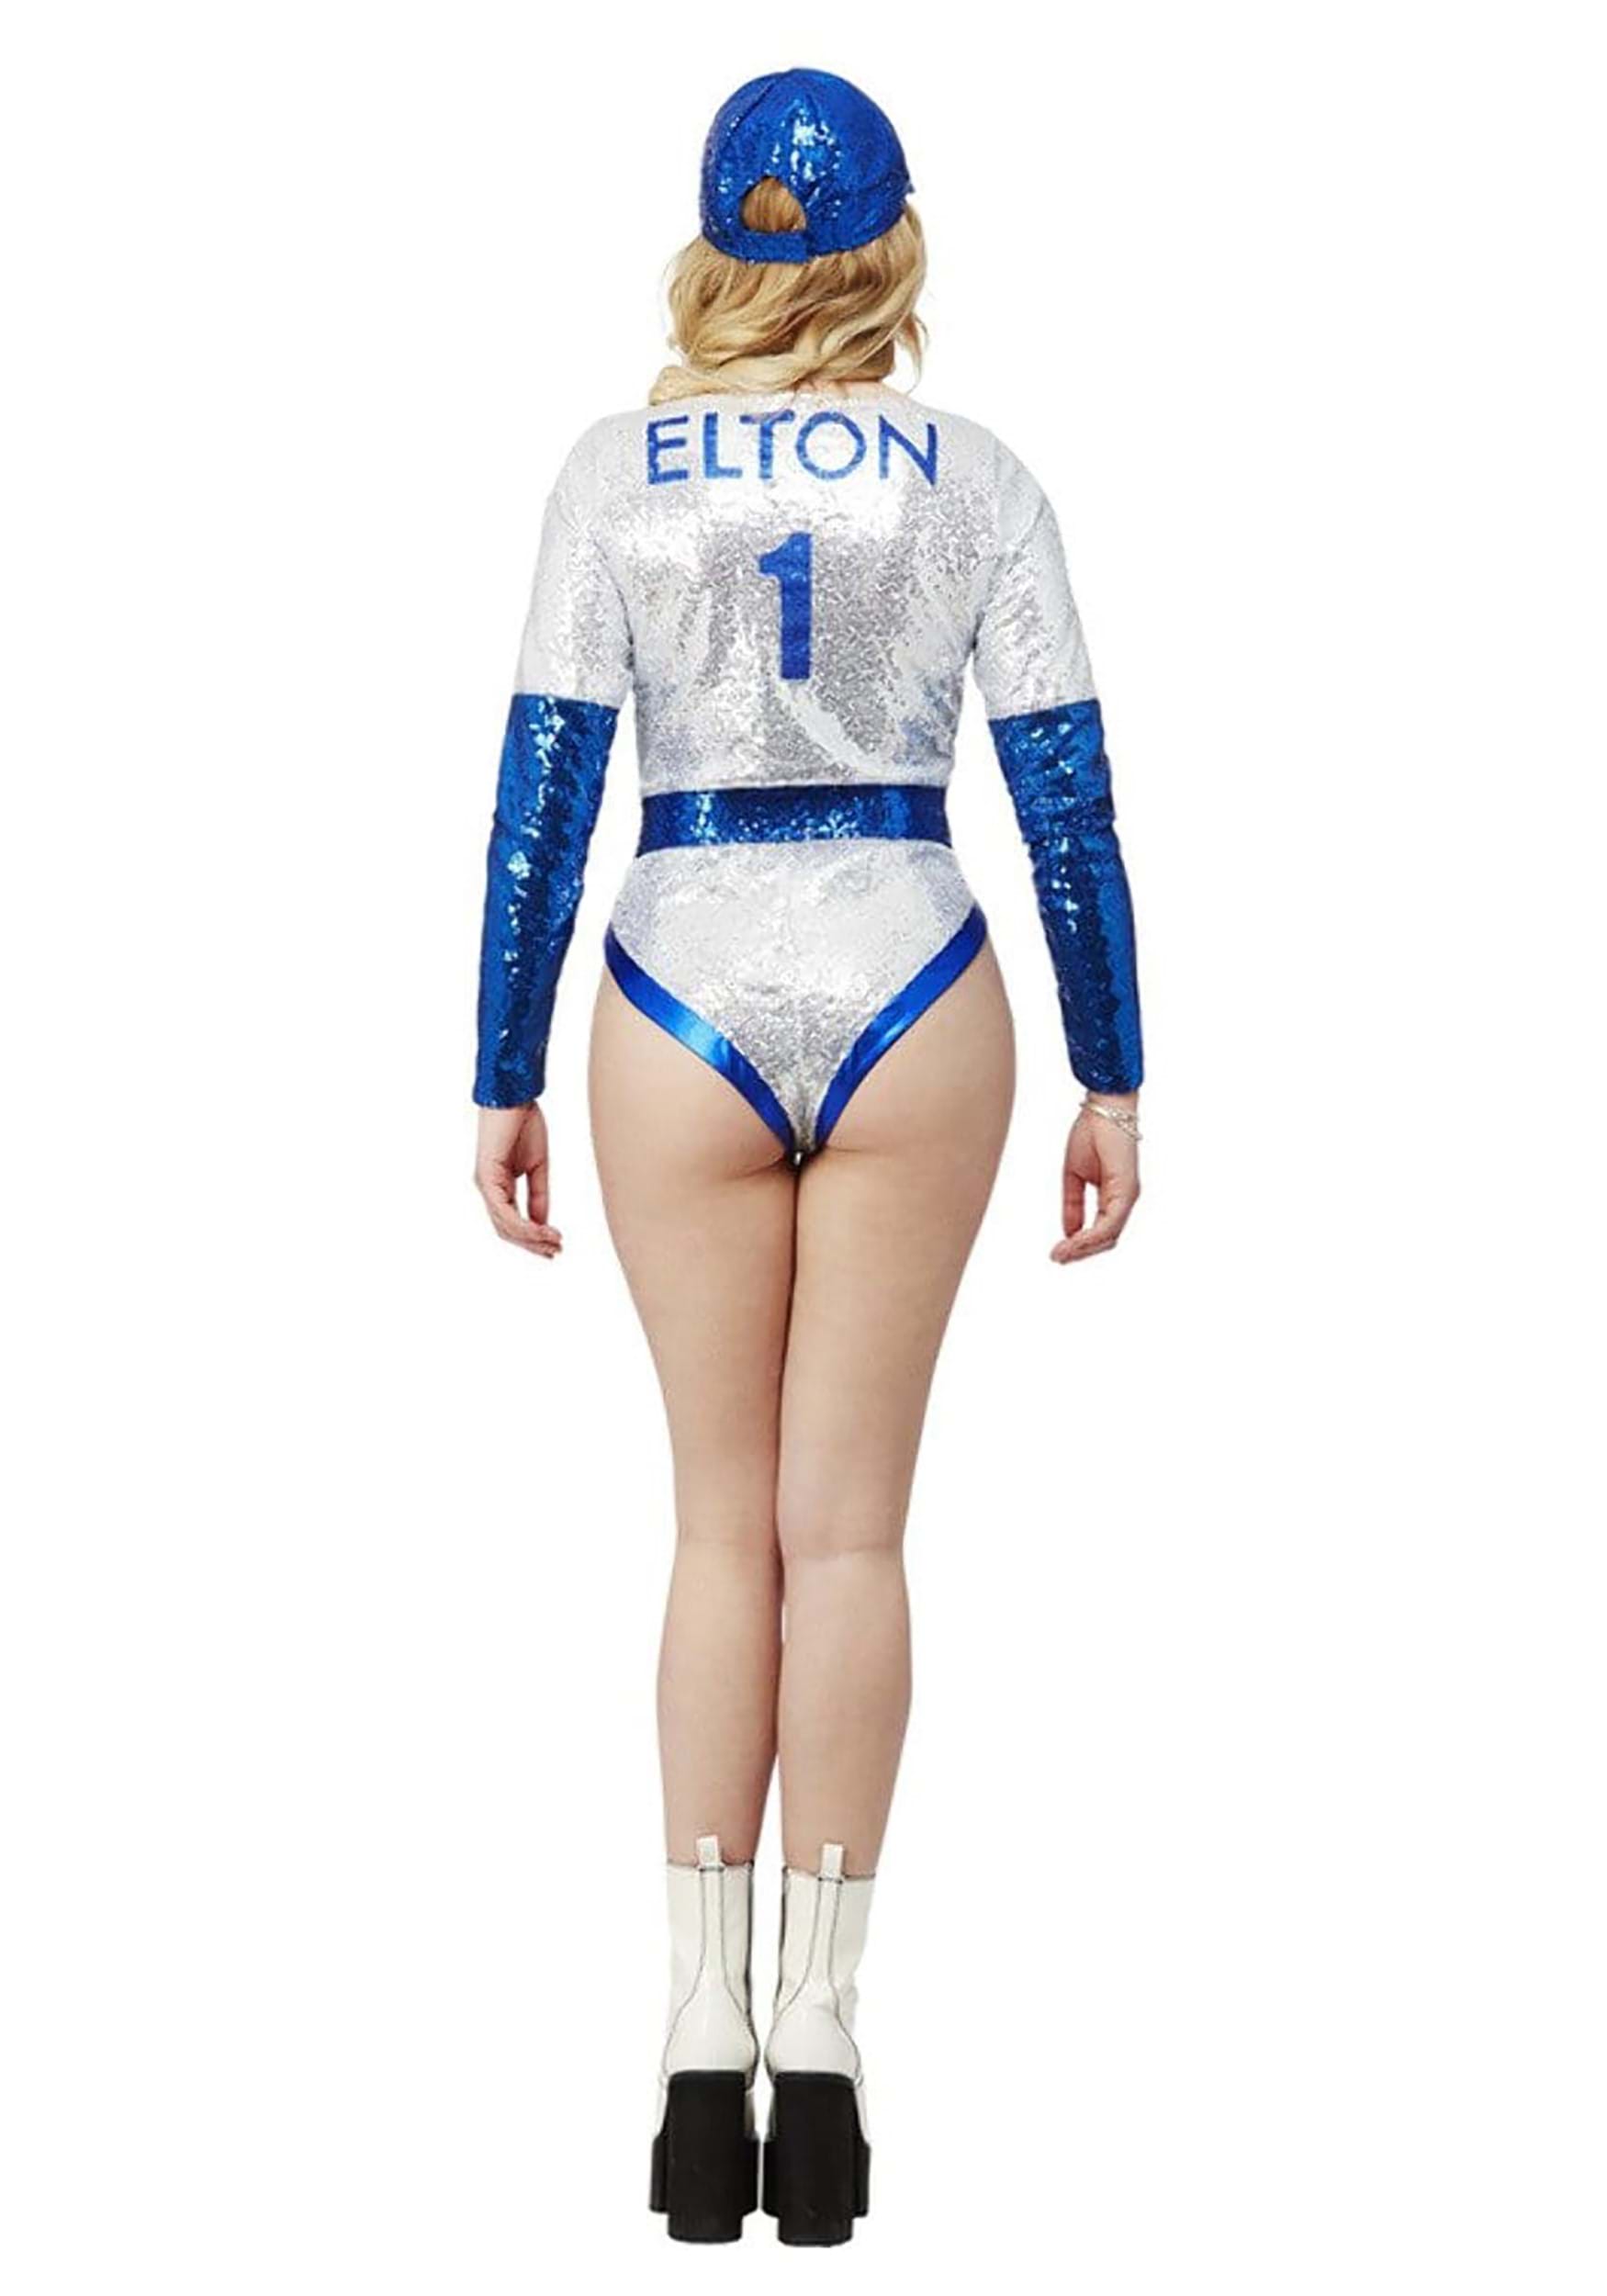 Elton Sequin Baseball Uniform Adult Costume